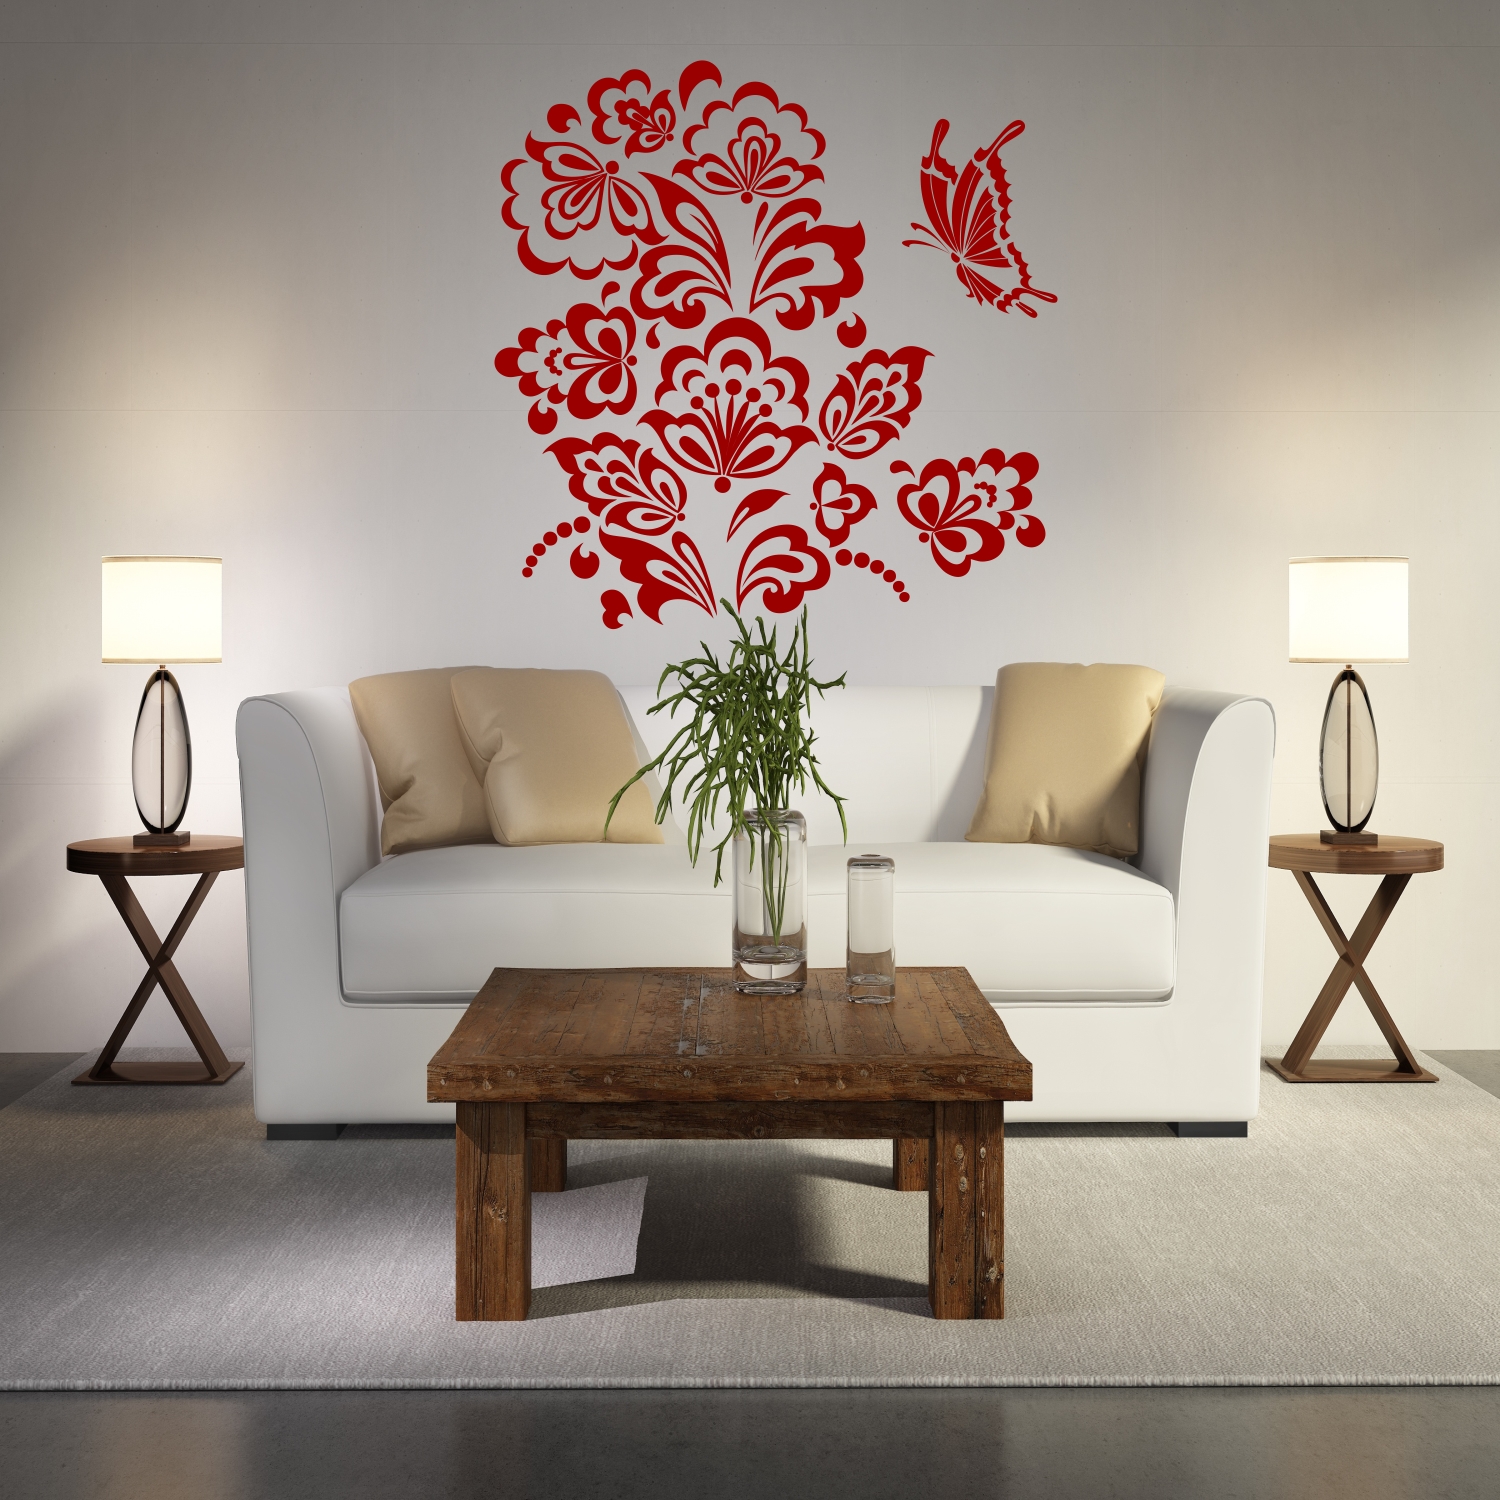 Image : Motiv floral cu fluturi